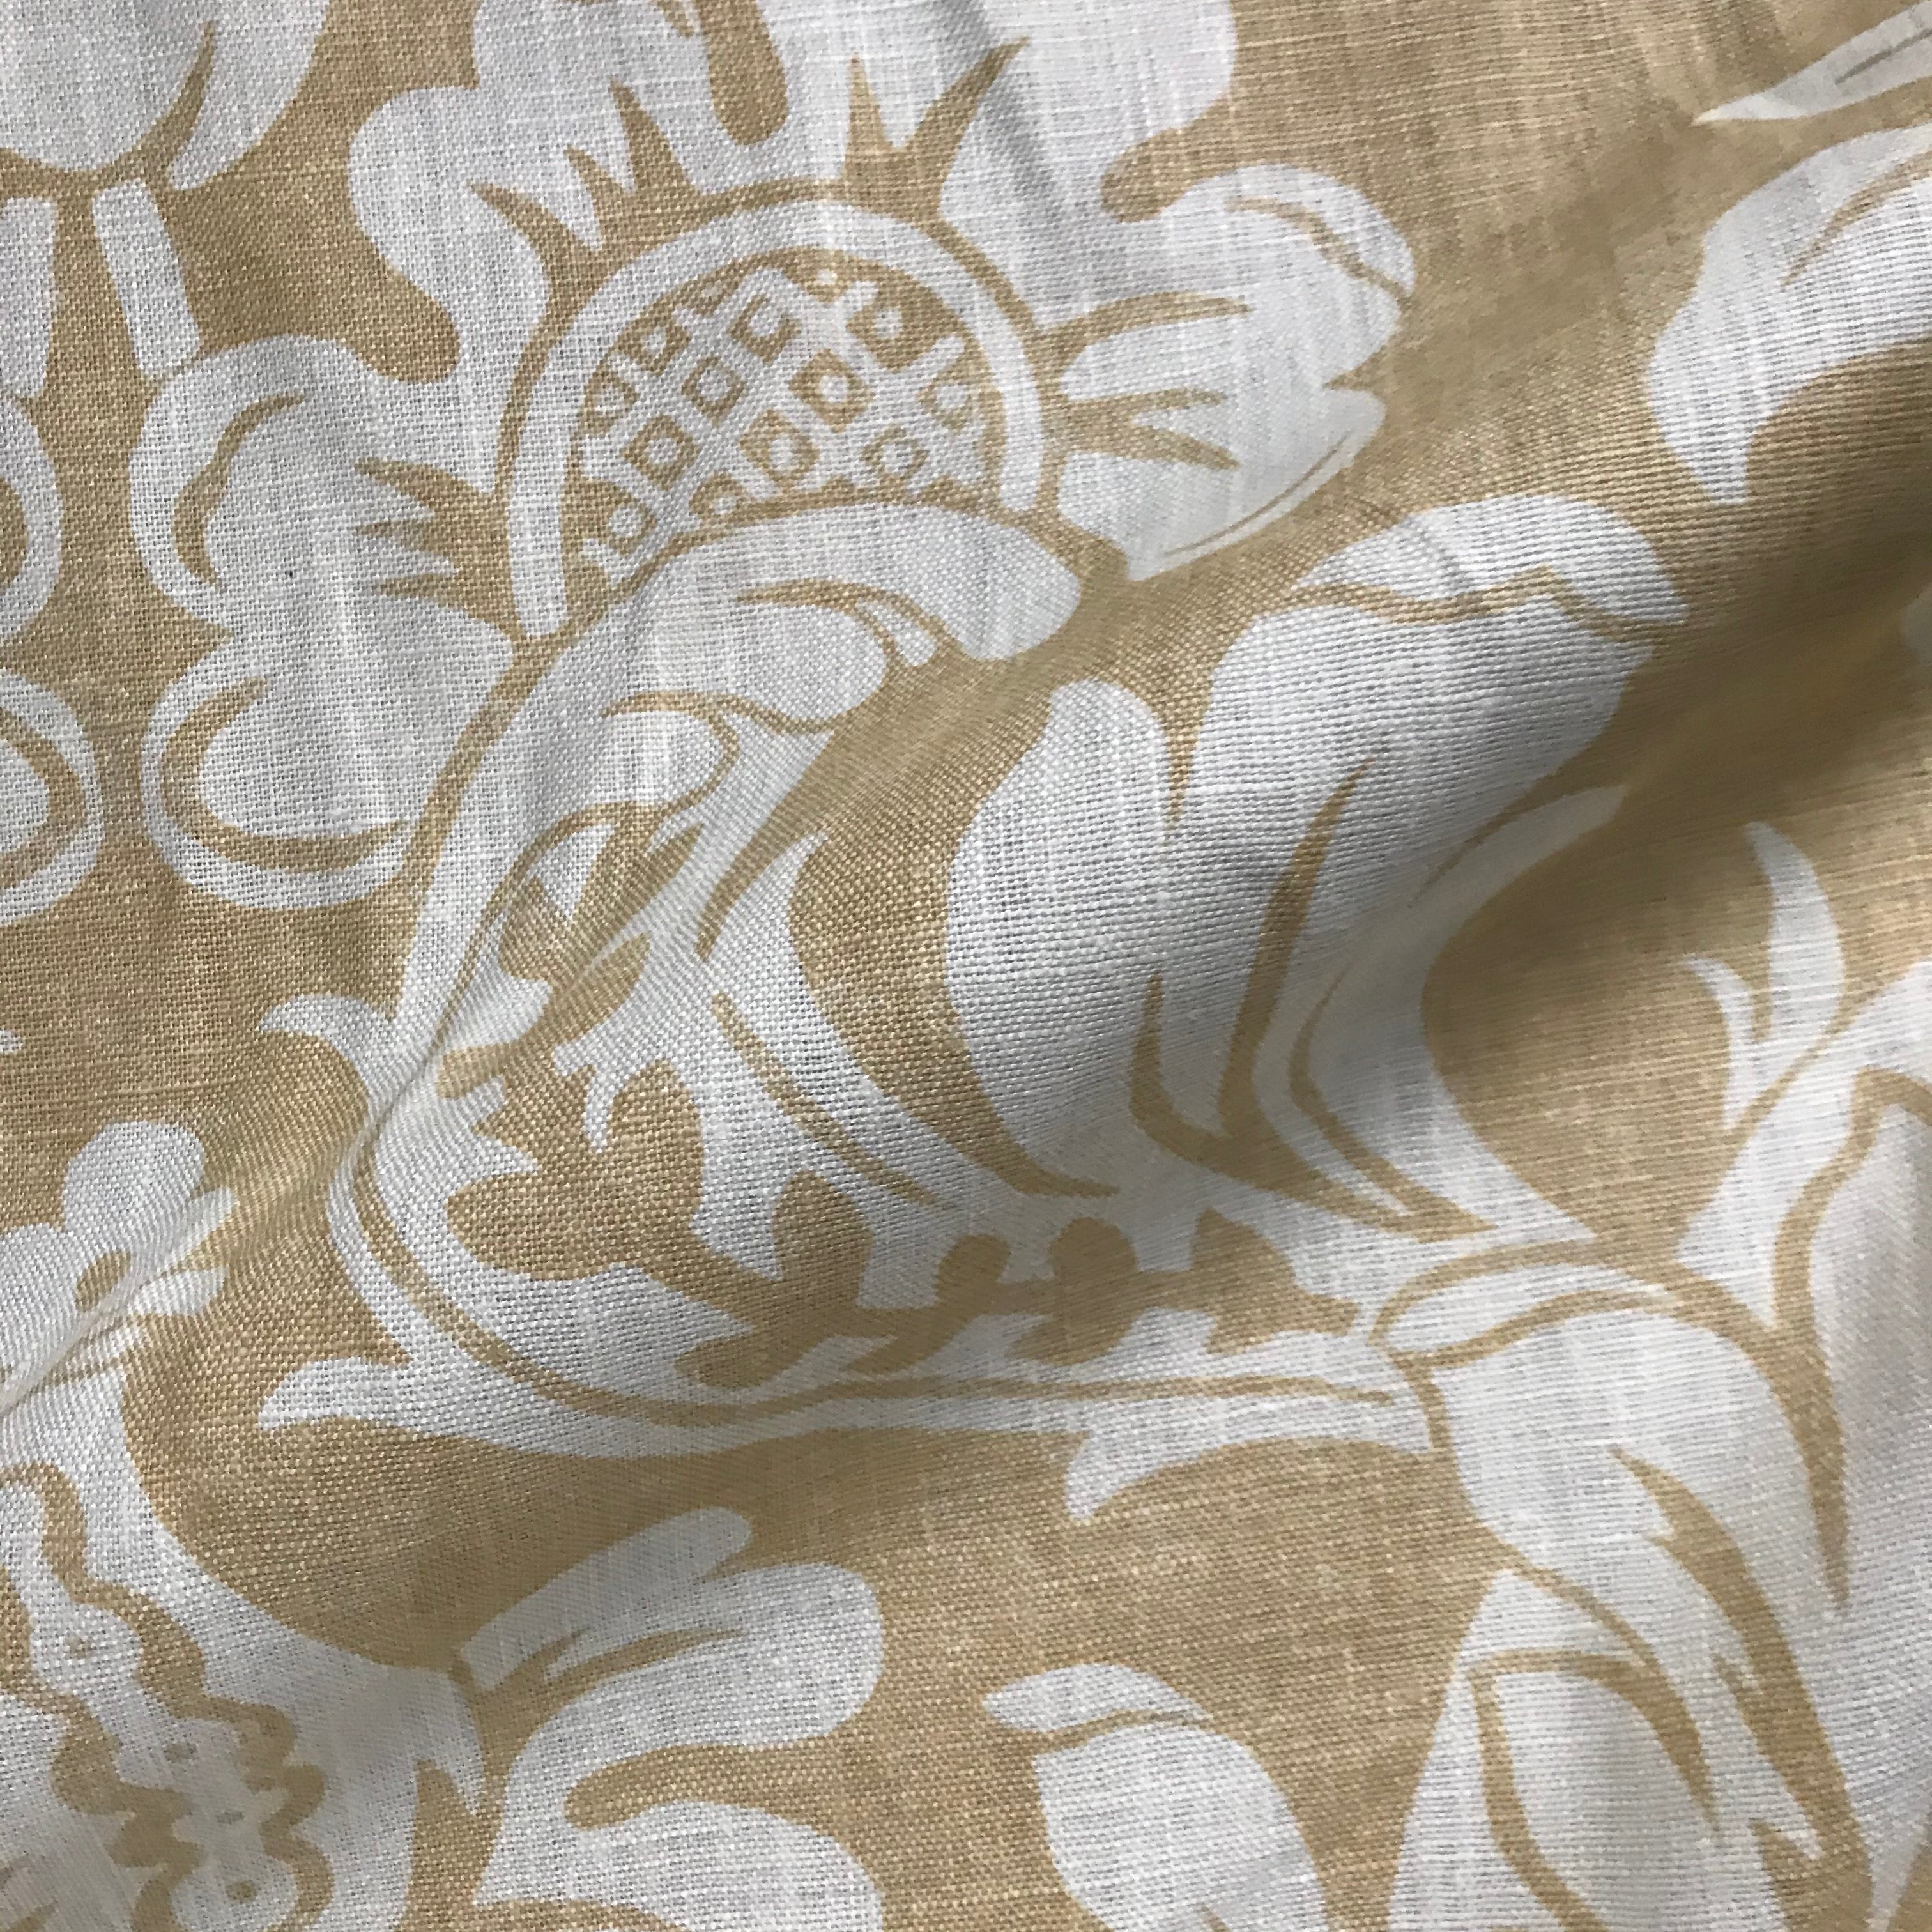 Linen Cotton Cream Beige Floral Print Upholstery Drapery Fabric FB